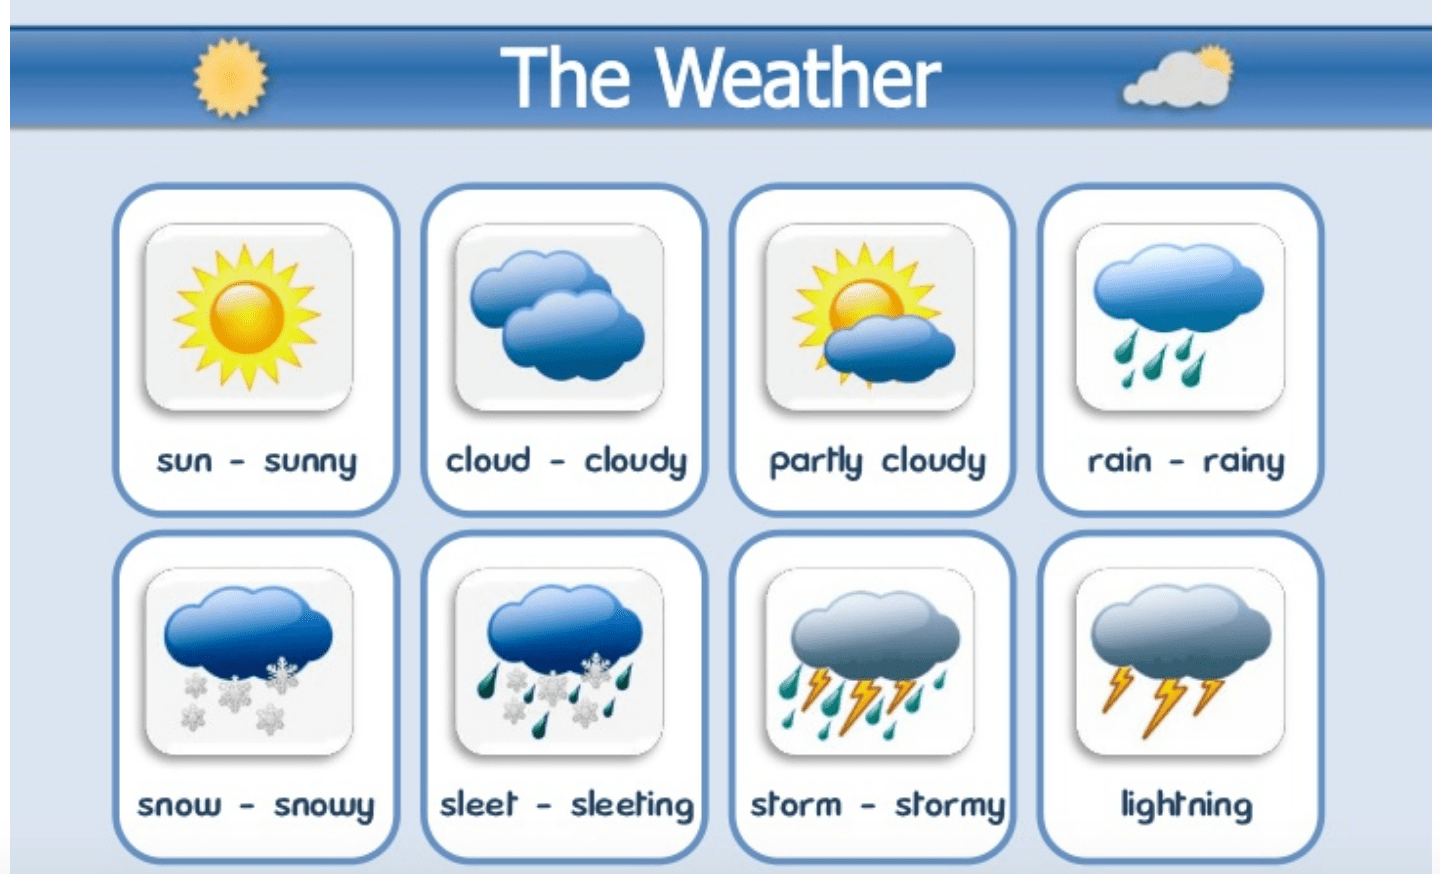 I like sunny weather. Погода на английском языке. Карточки weather для детей. Gjujlf ZF fzukbqcrjv. Weather английский язык.